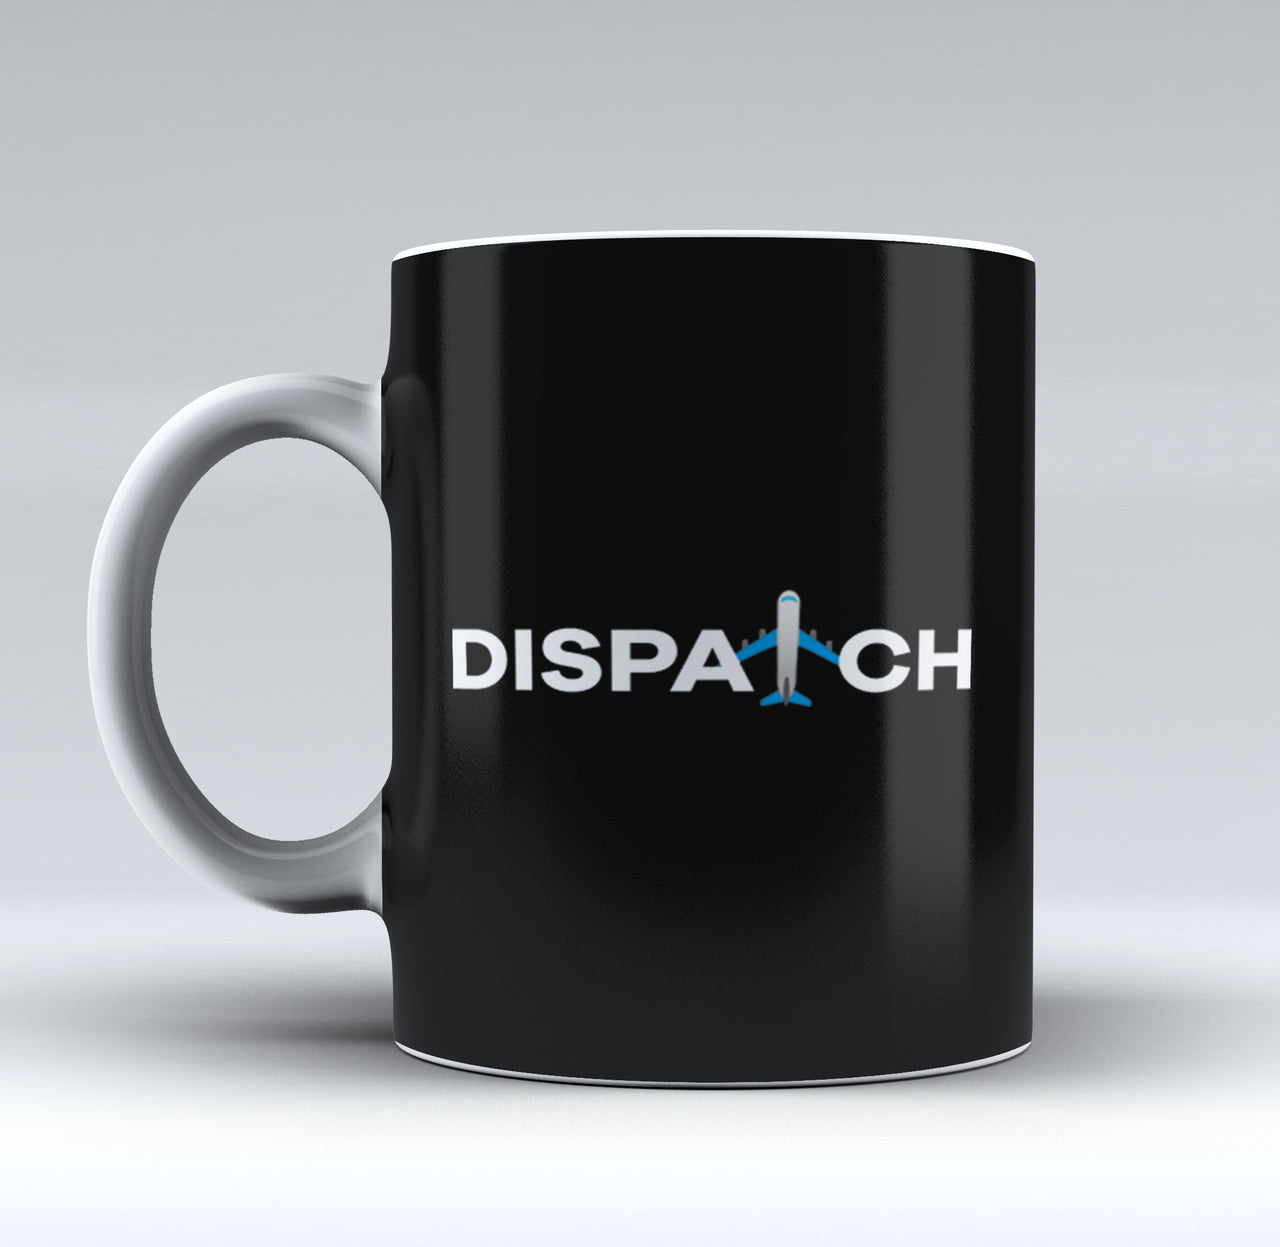 Dispatch Designed Mugs